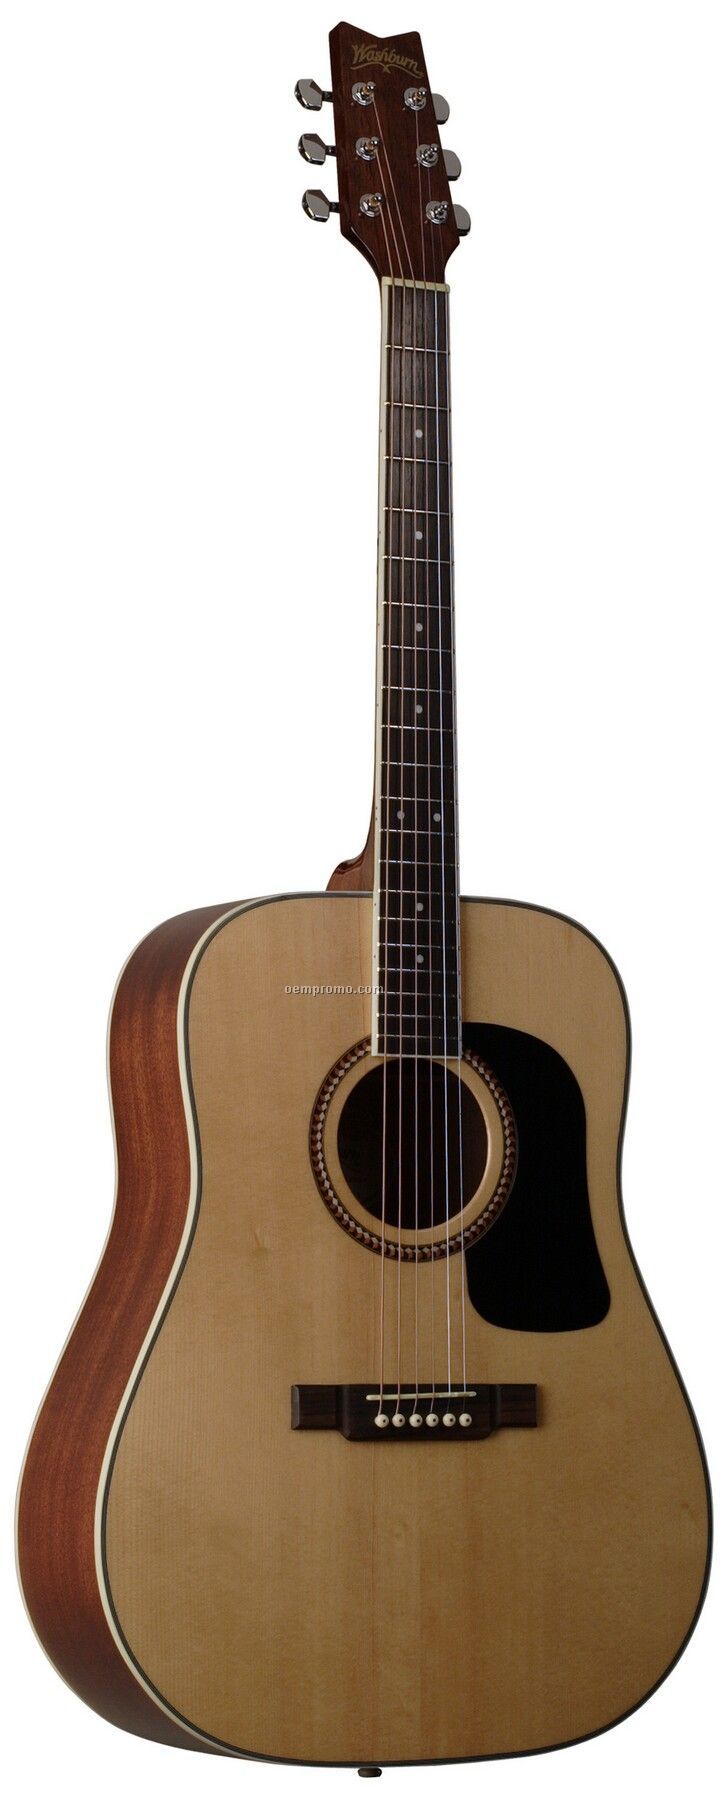 Washburn D10s Solid Top Acoustic Guitar